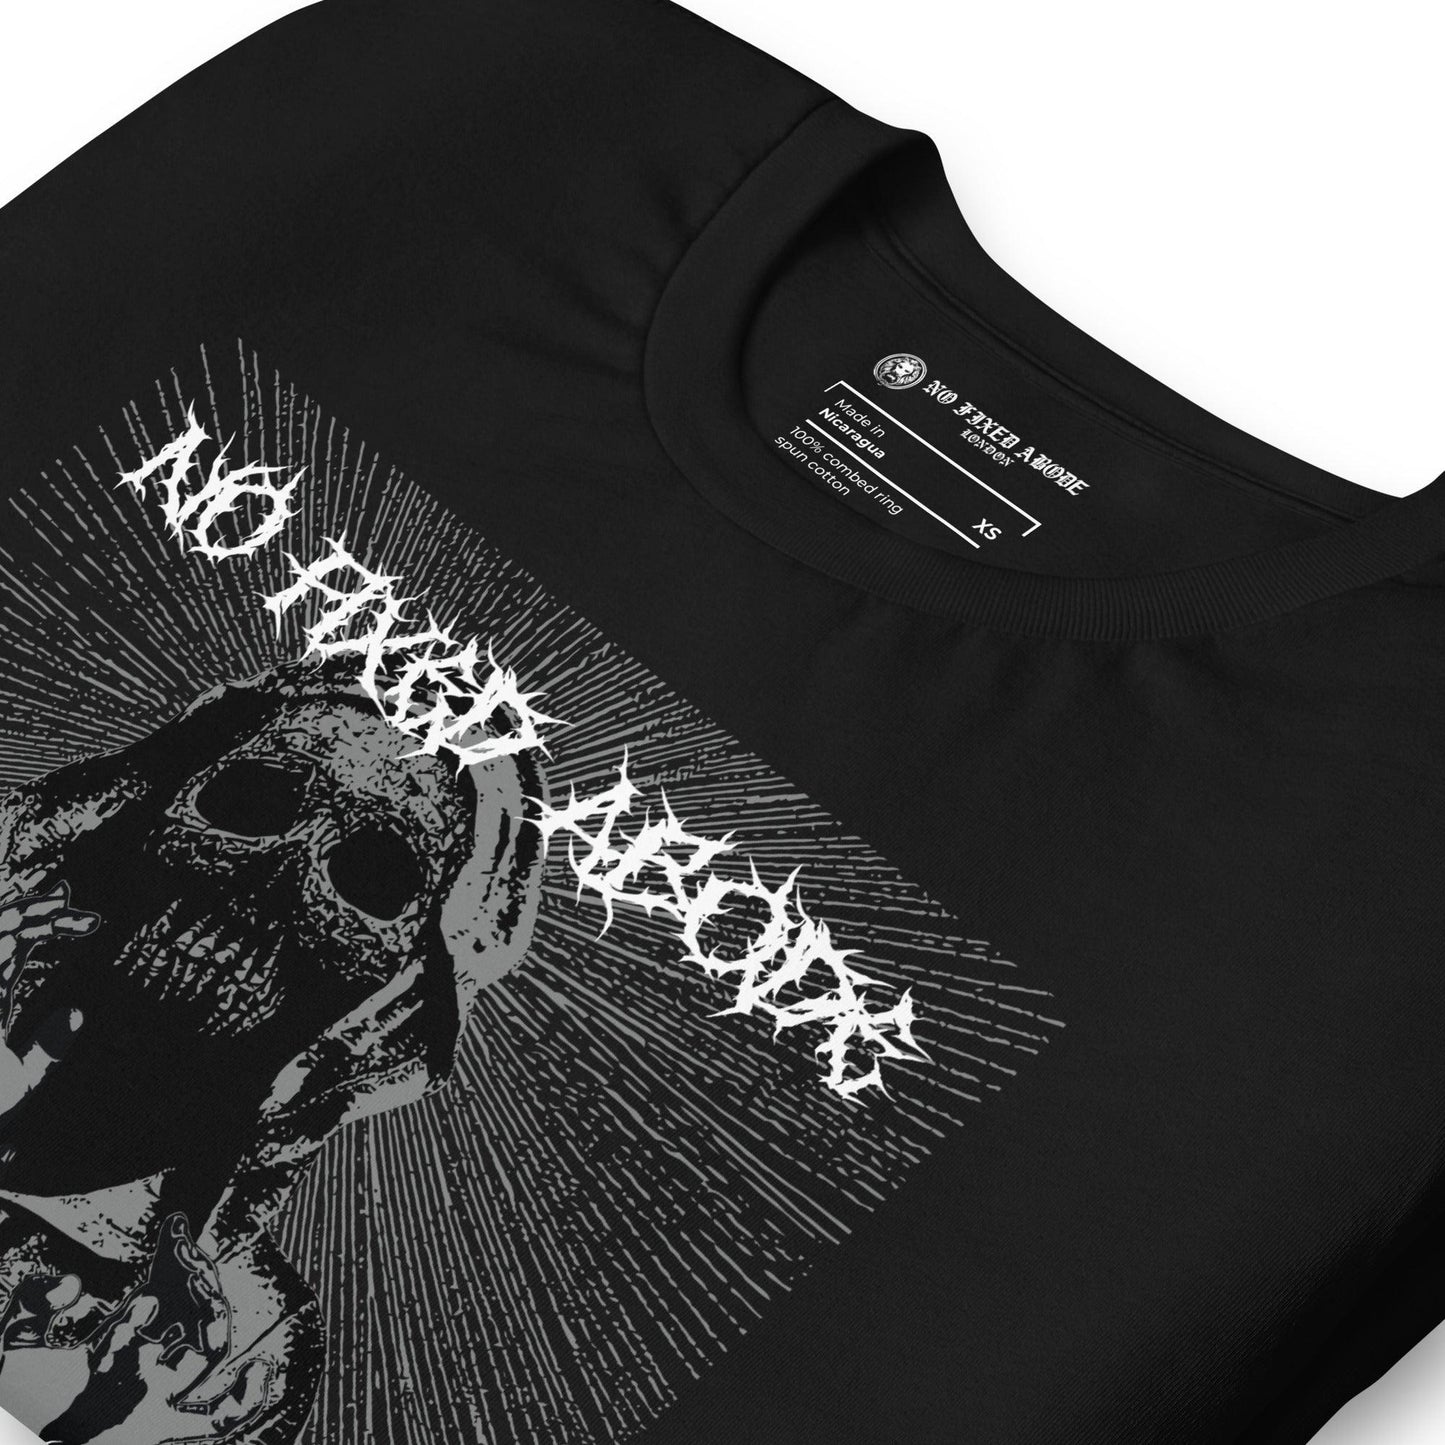 Death Metal Style - I Did It My Way T-shirt - NO FIXED ABODE Punkrock Mens Luxury Streetwear UK